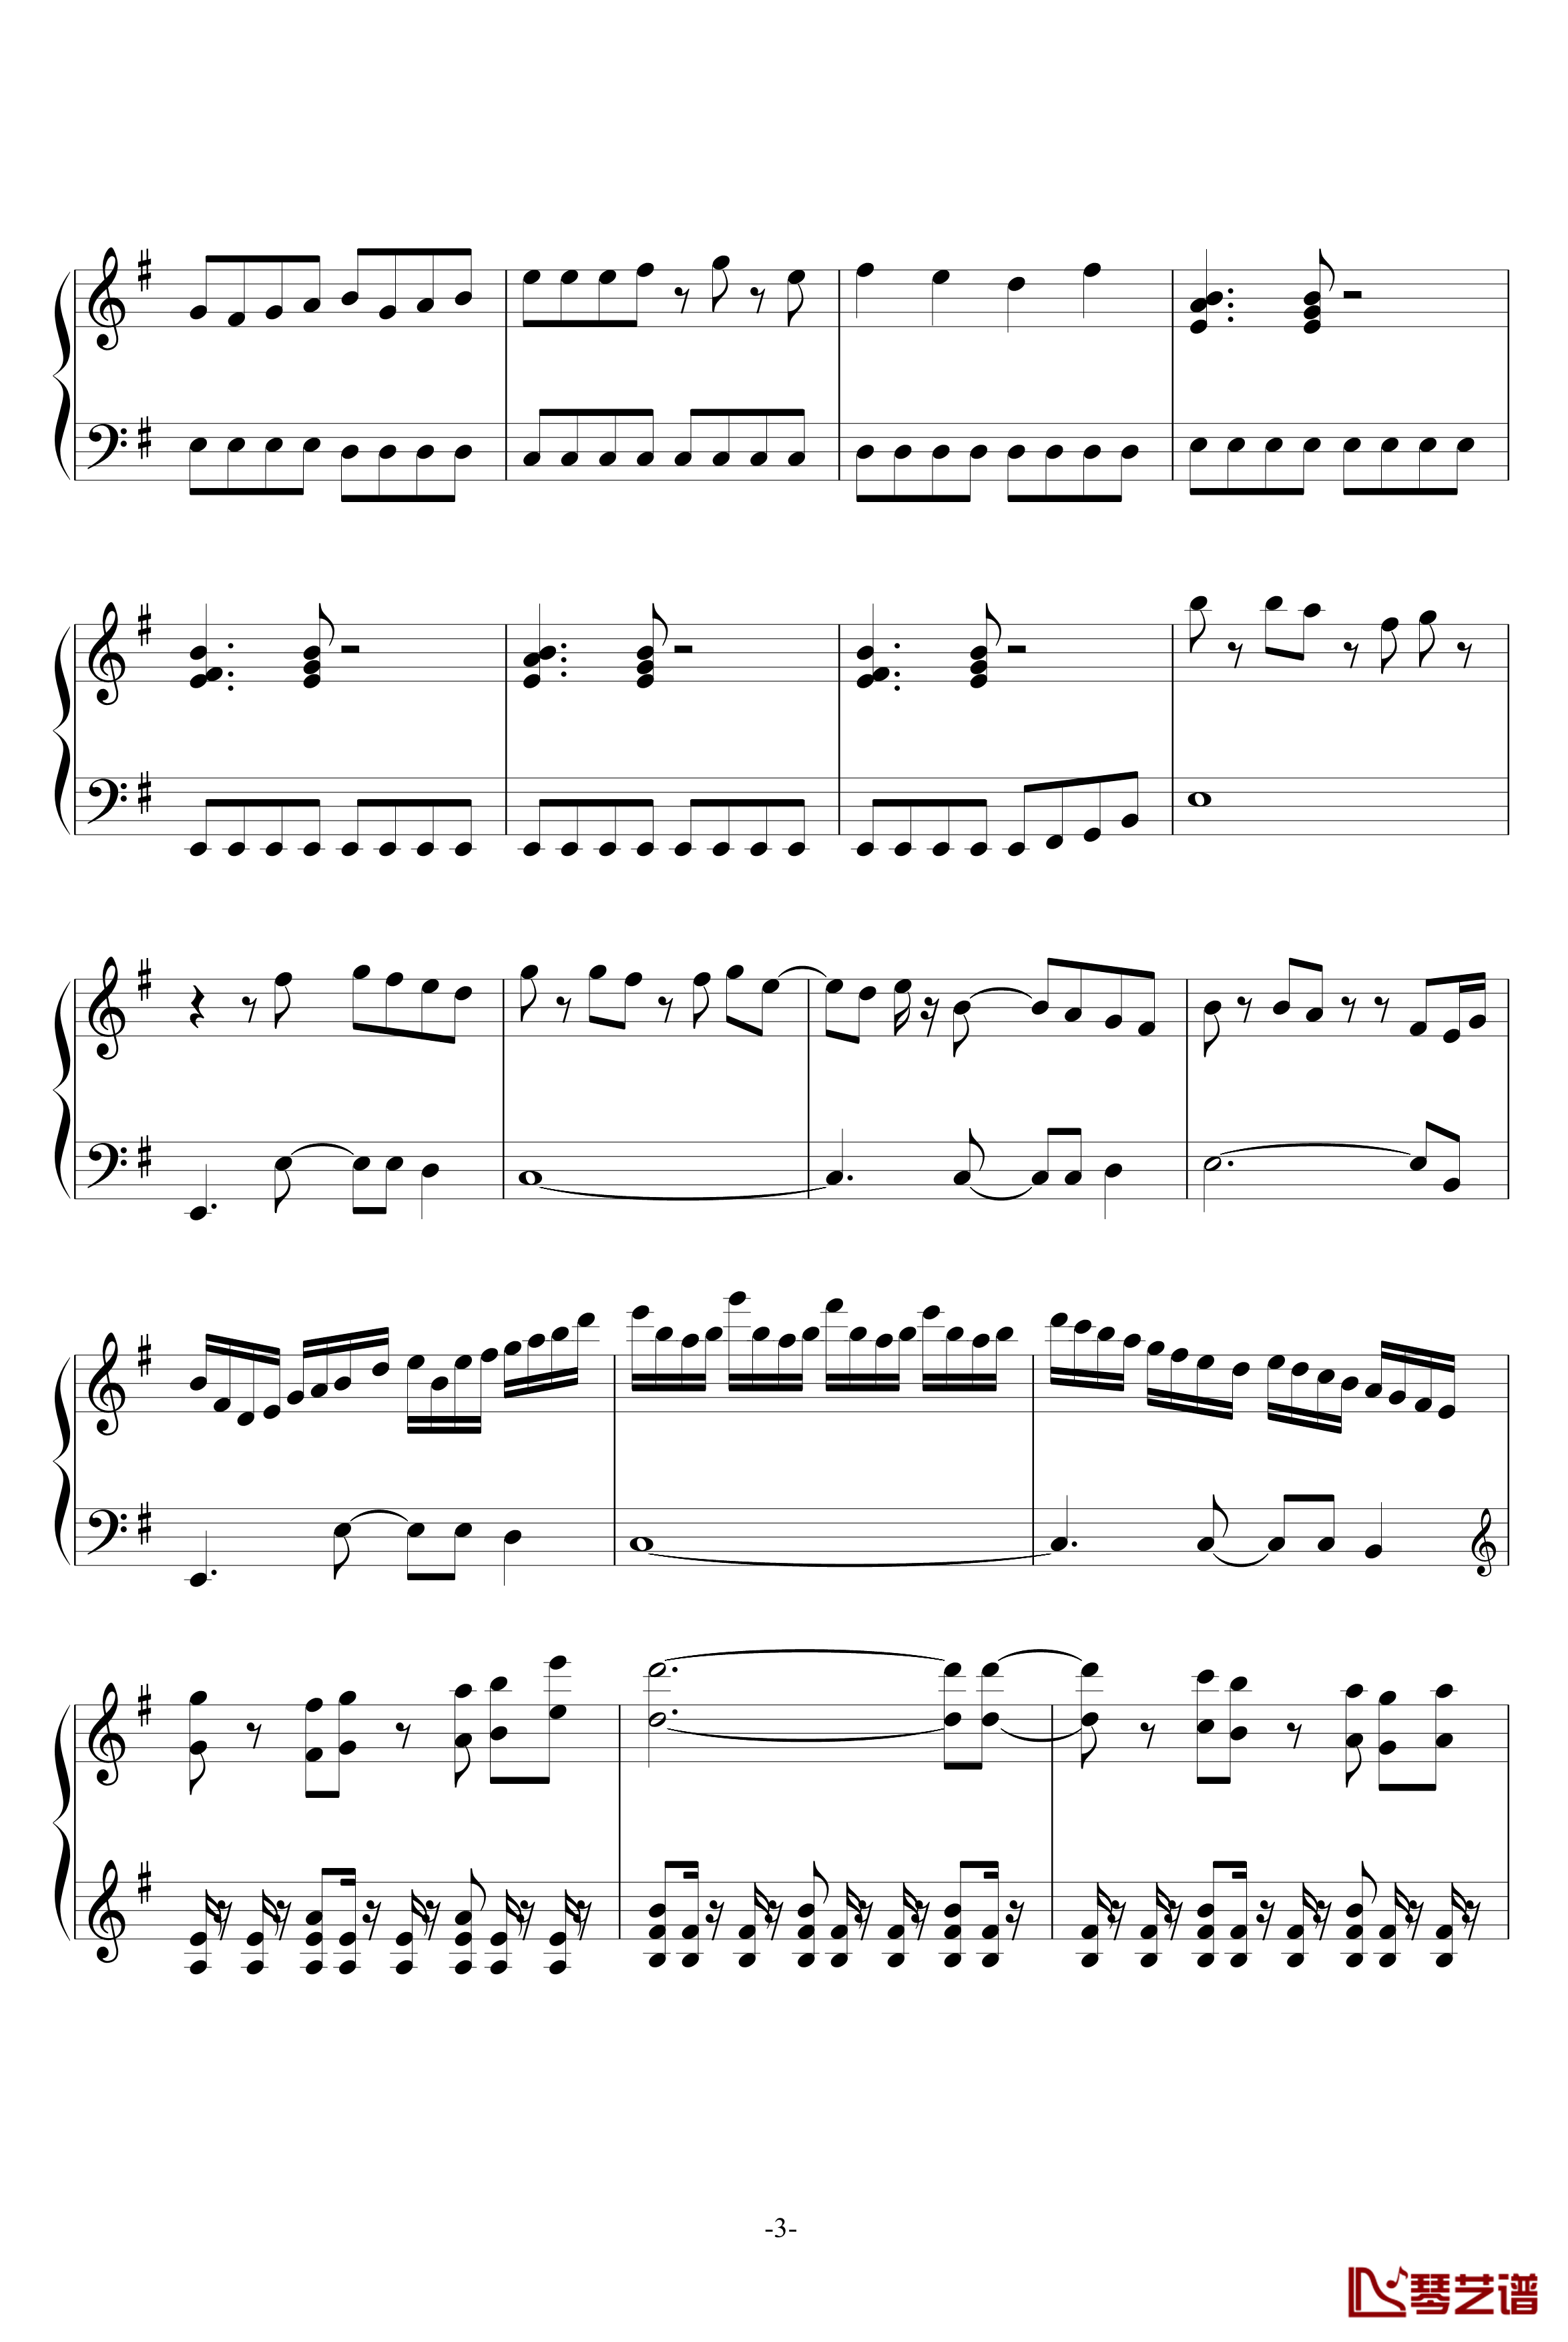  Langrisser 5钢琴谱-梦幻模拟战-Σ-066-SIGMA-游戏3